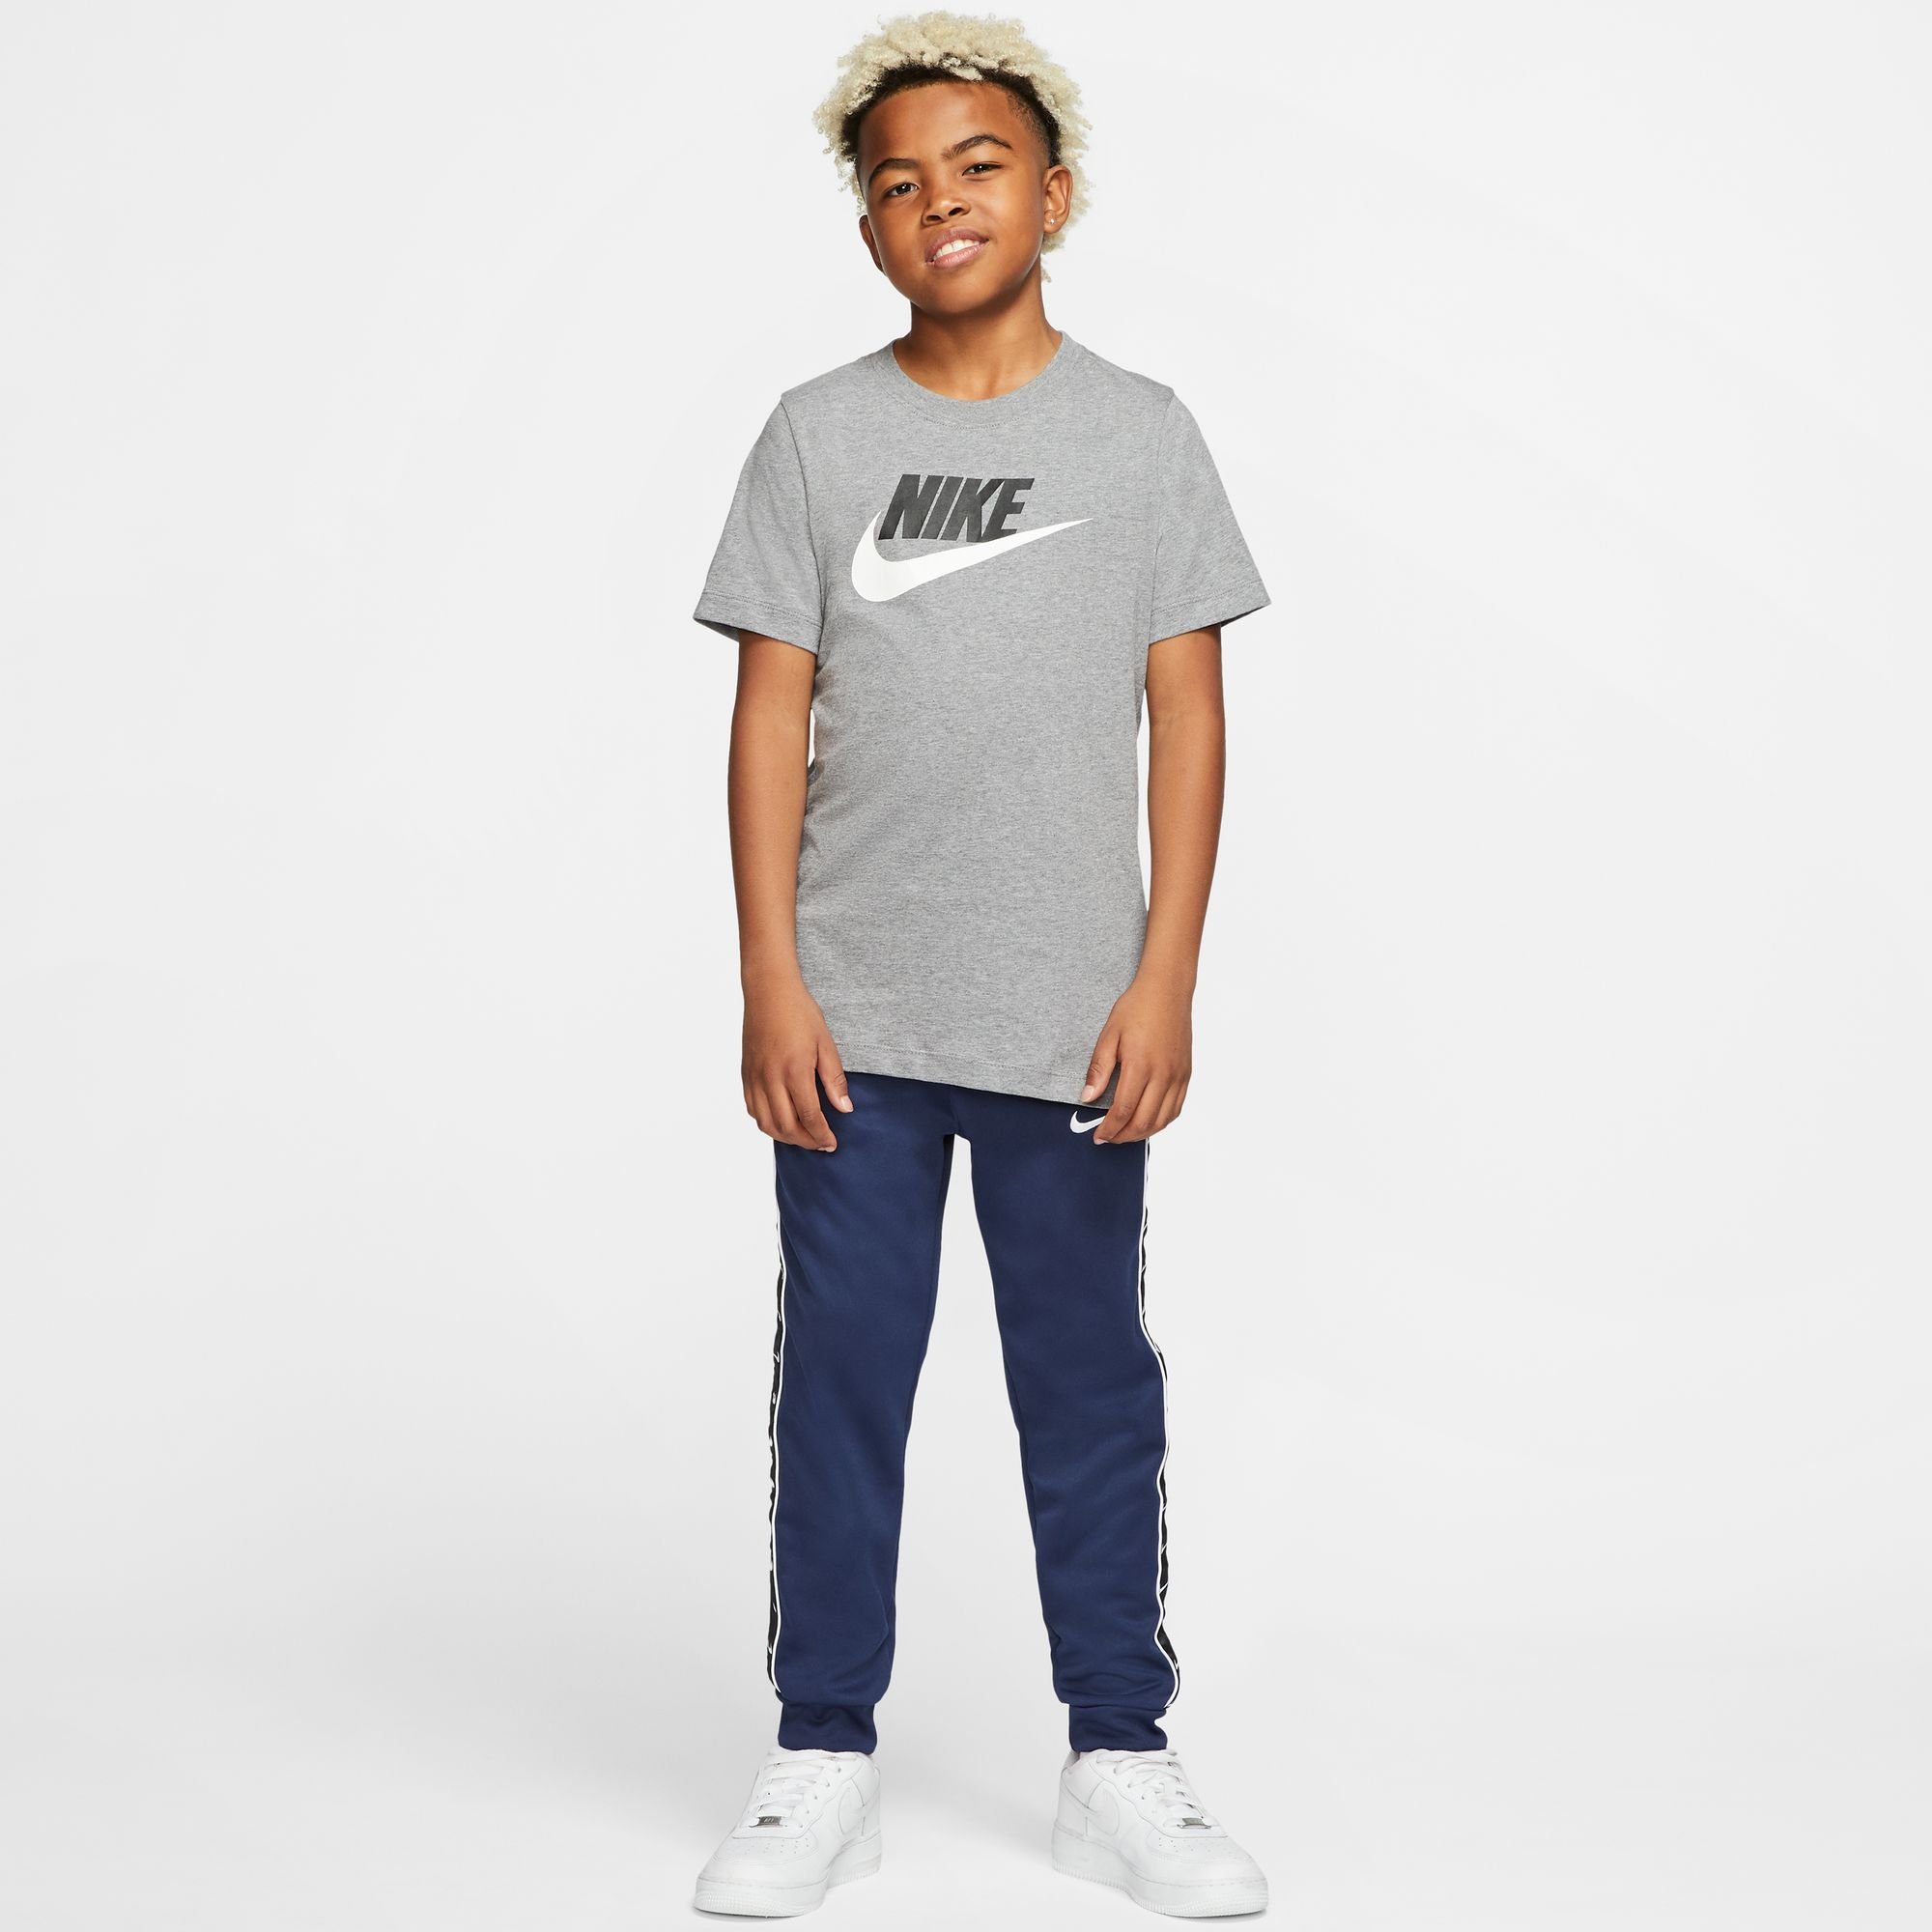 Nike Sportswear T-SHIRT grau-meliert KIDS' COTTON T-Shirt BIG